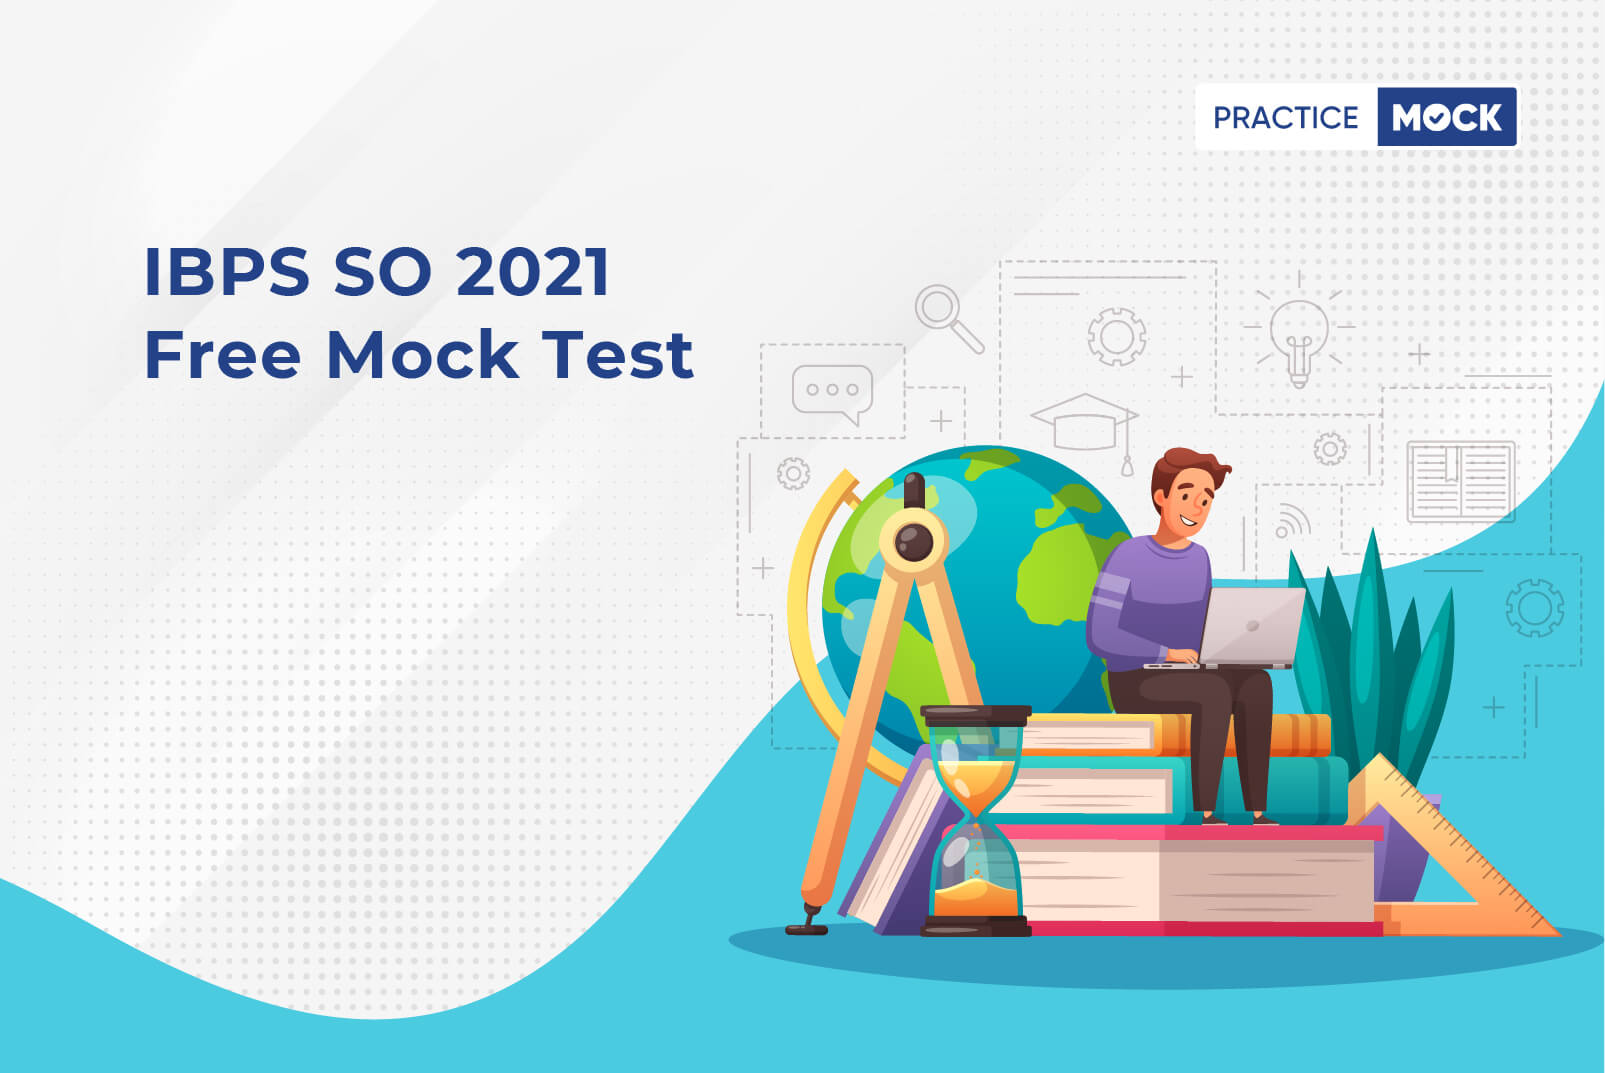 IBPS SO 2021 Free Mock Test